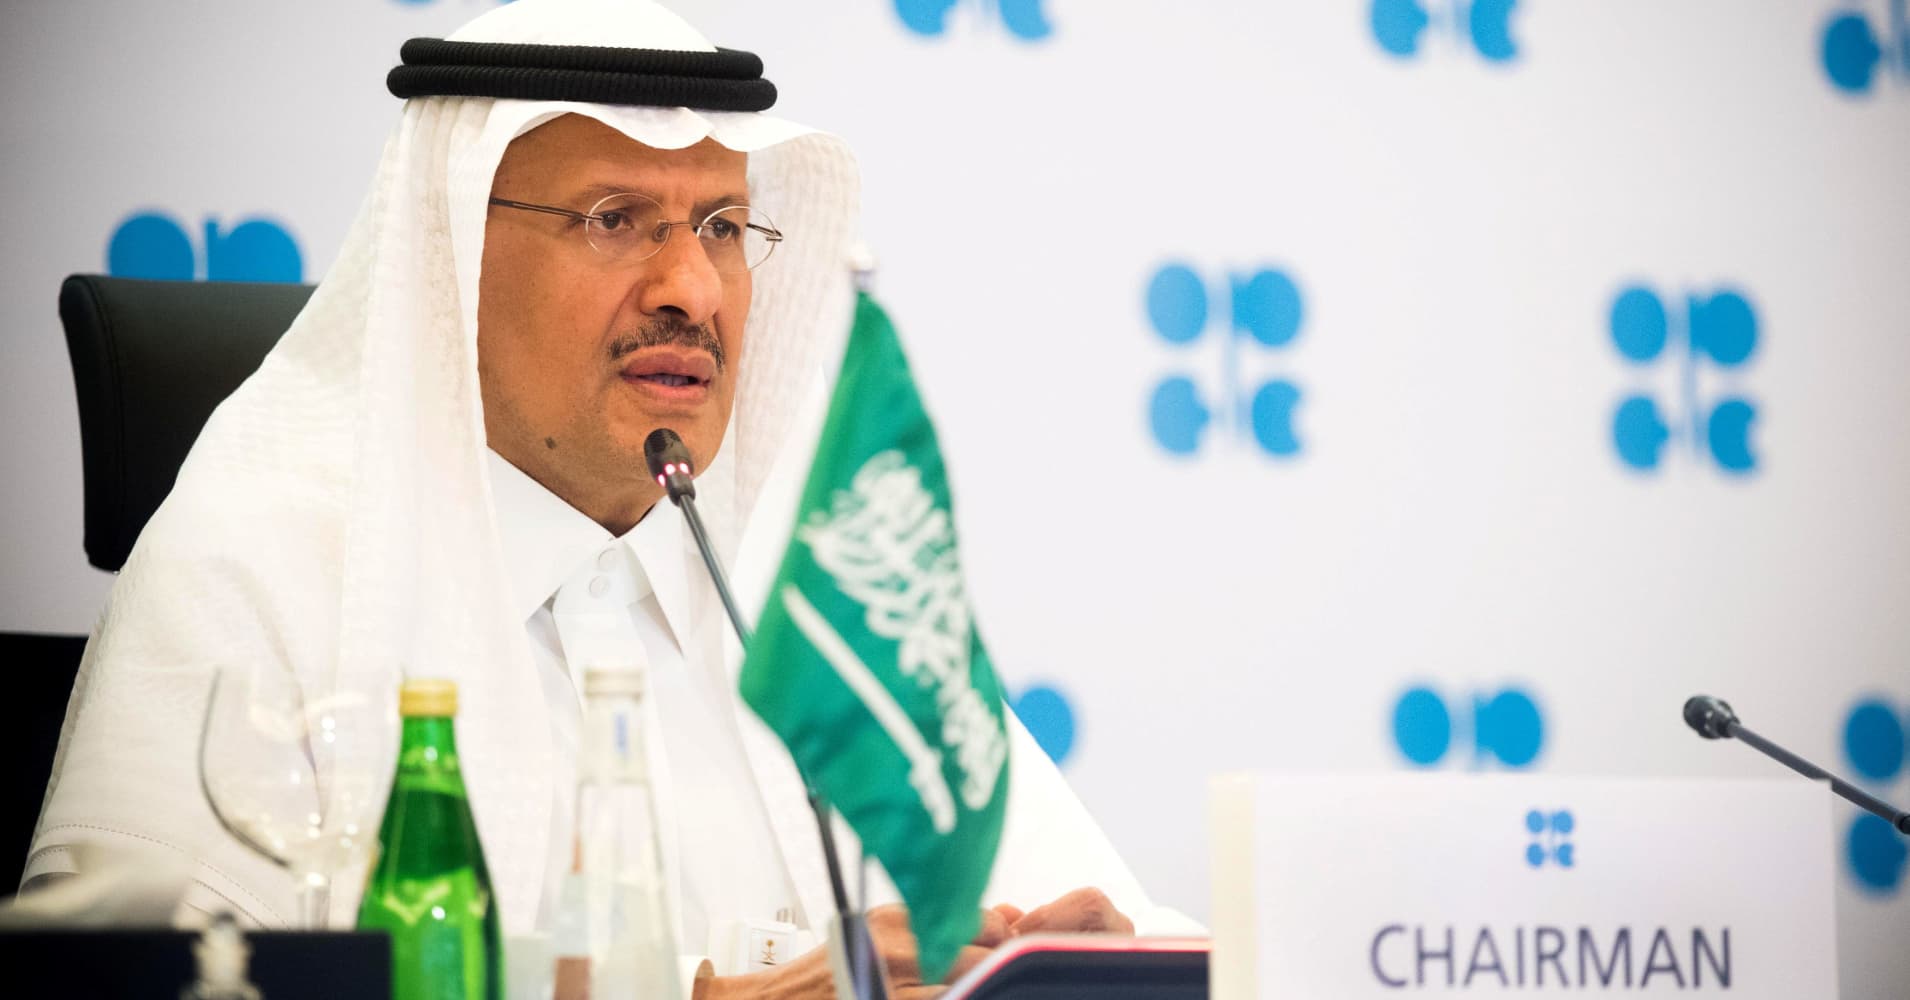 Saudi Arabia's Minister of Energy Prince Abdulaziz bin Salman Al-Saud speaks via video link during a virtual emergency meeting of OPEC and non-OPEC countries, following the outbreak of the coronavirus disease (COVID-19), in Riyadh, Saudi Arabia April 9, 2020.